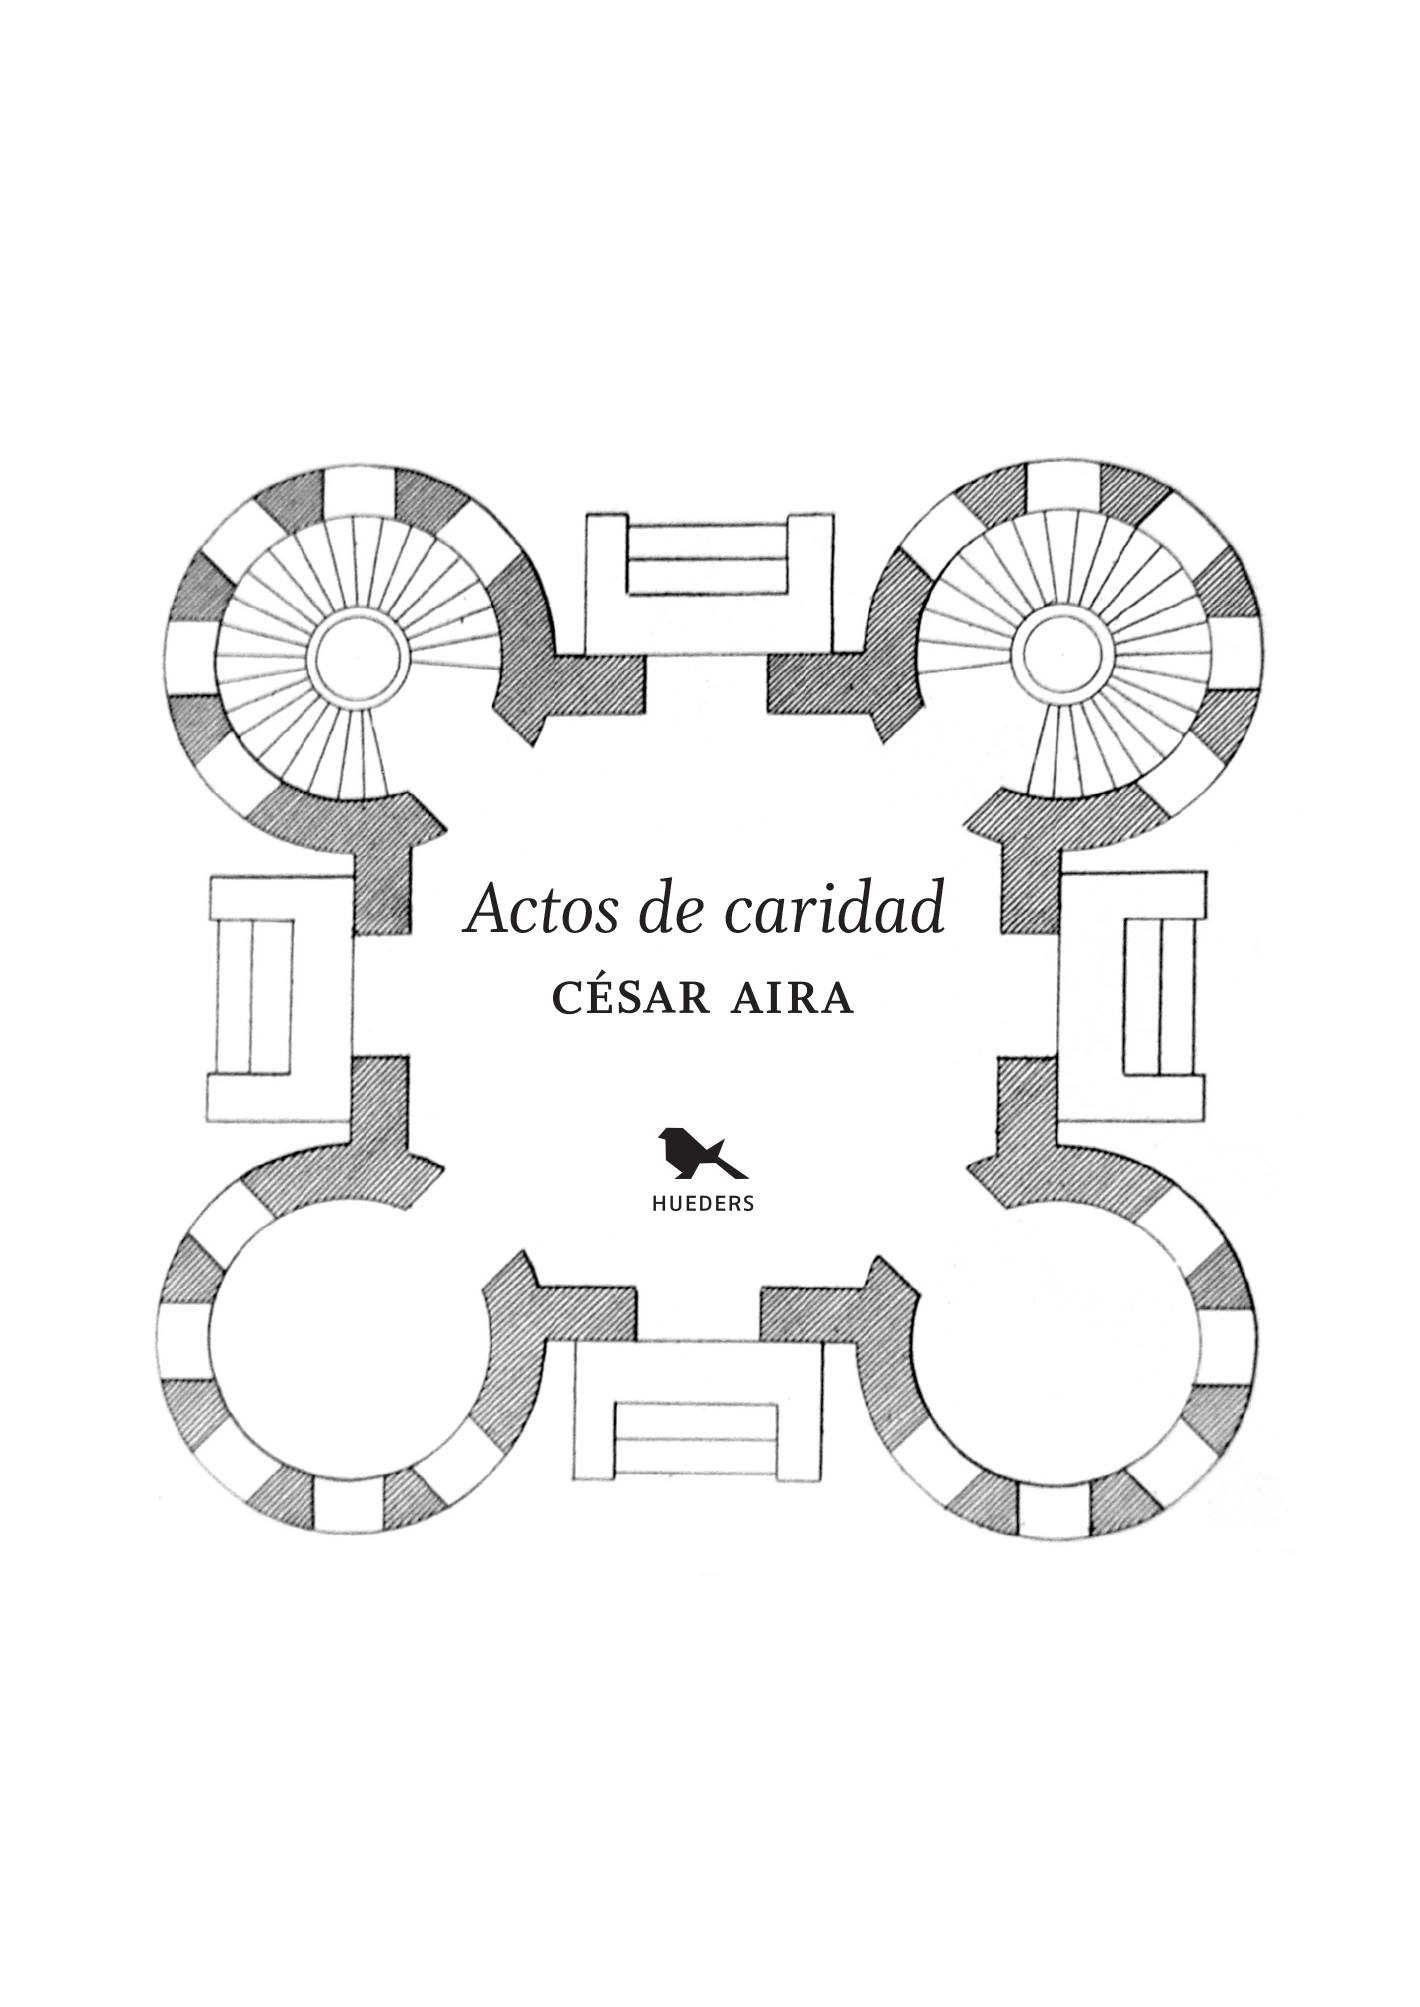 Adelanto: “Actos de caridad”, de César Aira